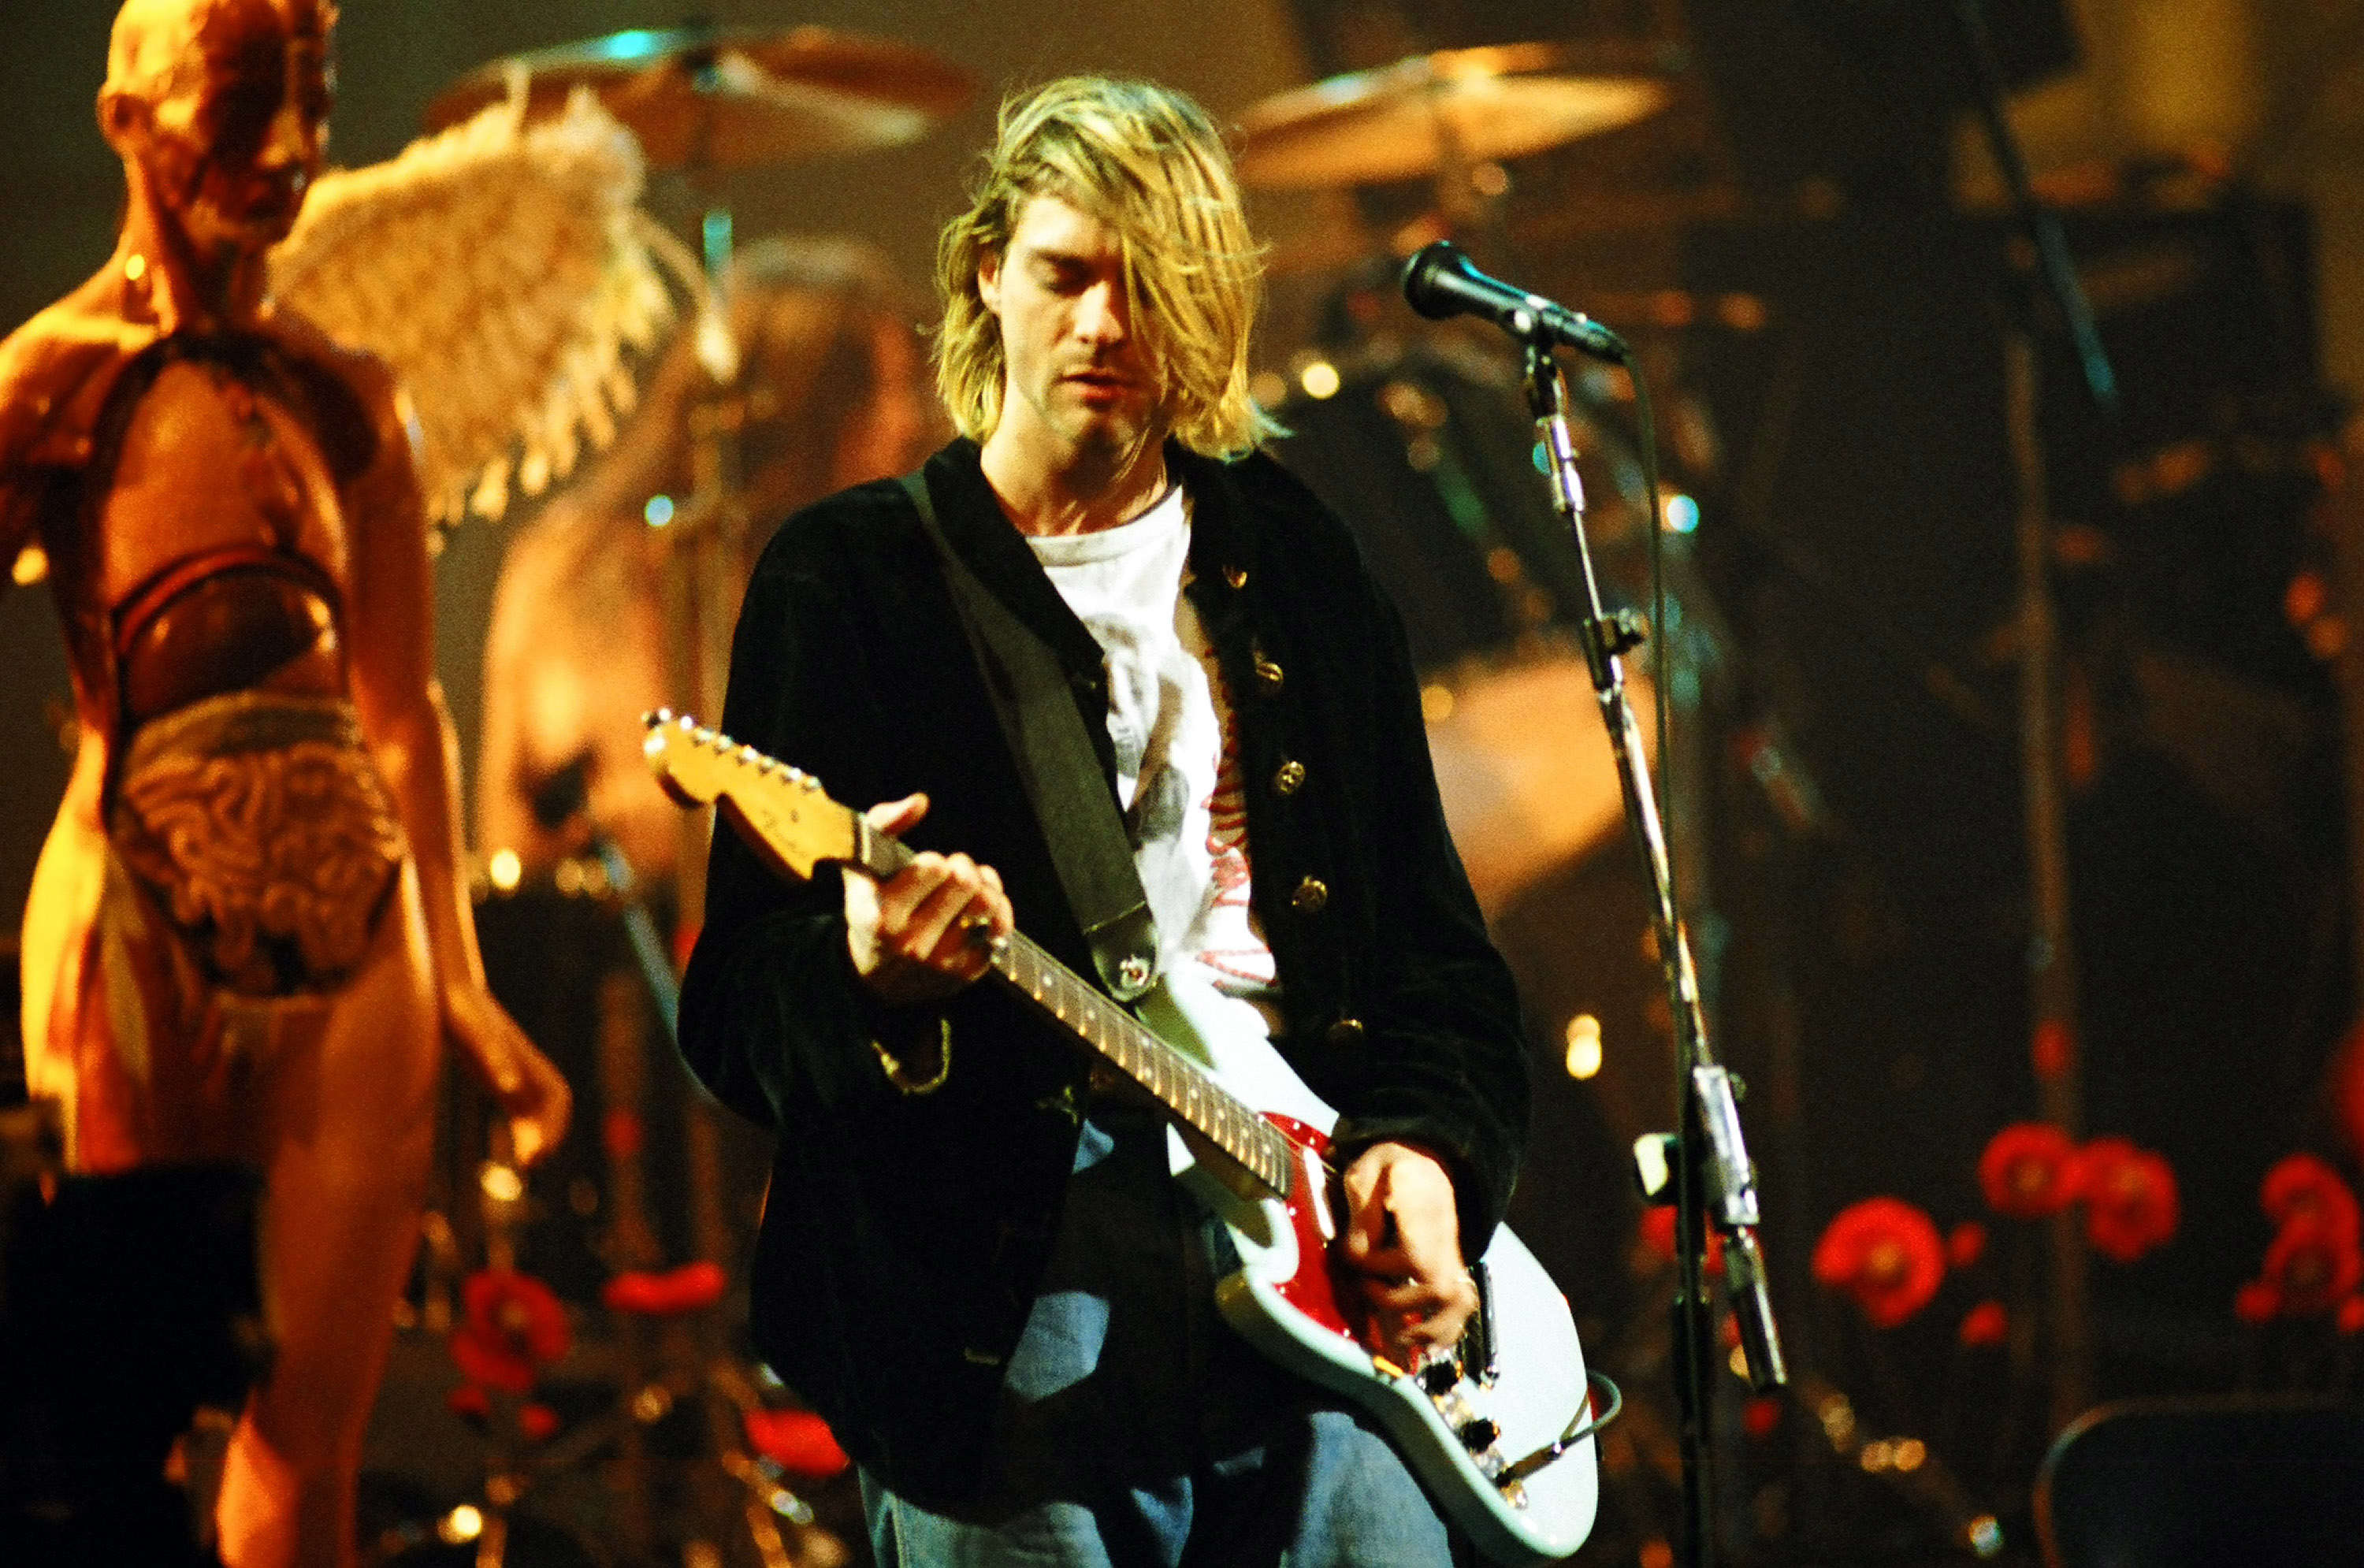 Nirvana guitar. Курт Кобейн. Курт Кобейн и Nirvana. Nirvana Kurt Cobain 1993. Нирвана группа Курта Кобейна.